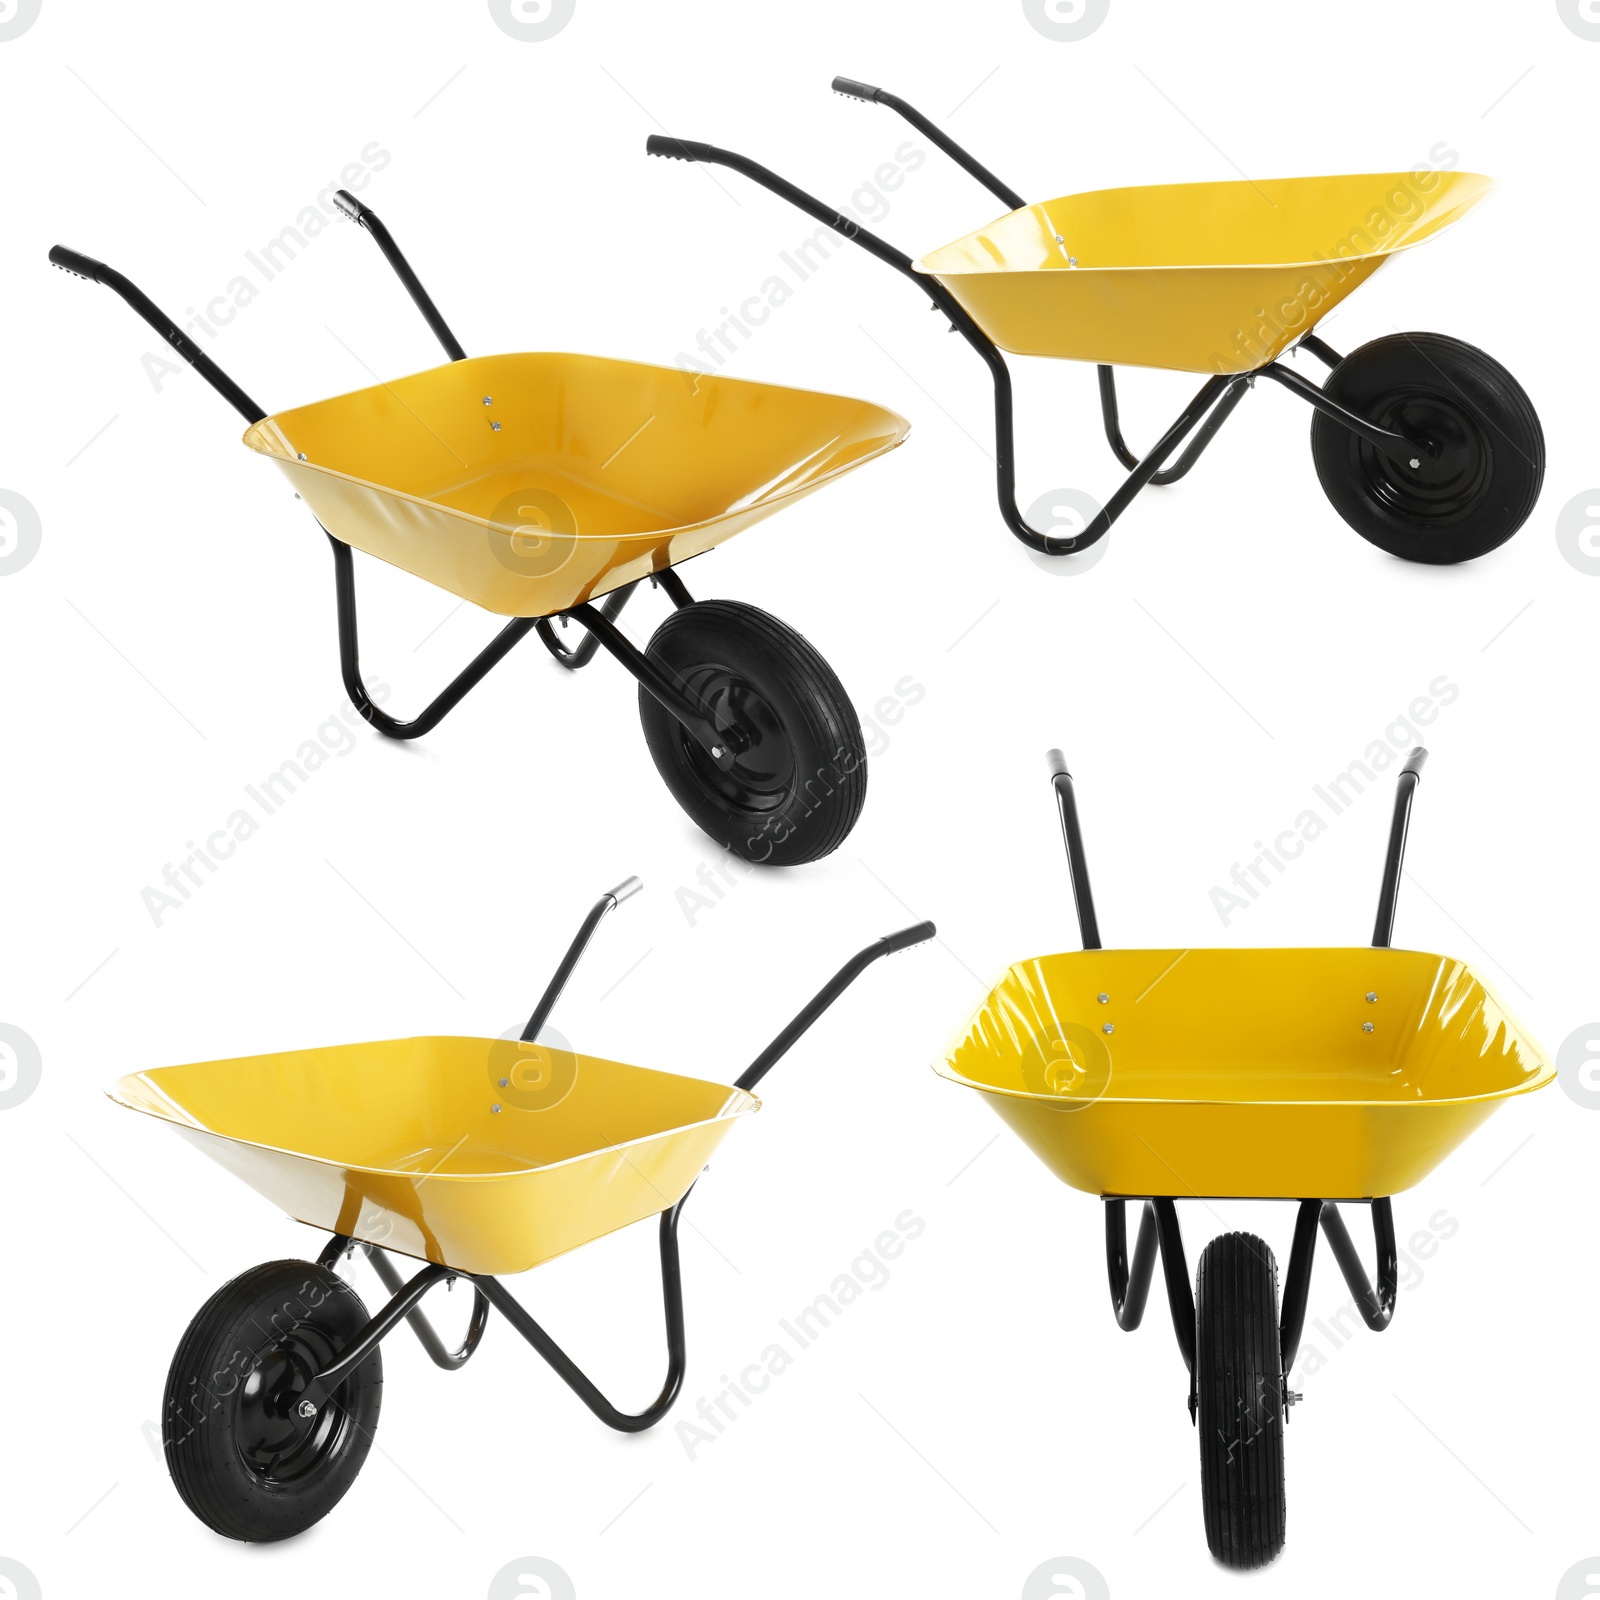 Image of Set of new yellow wheelbarrows on white background. Gardening tool